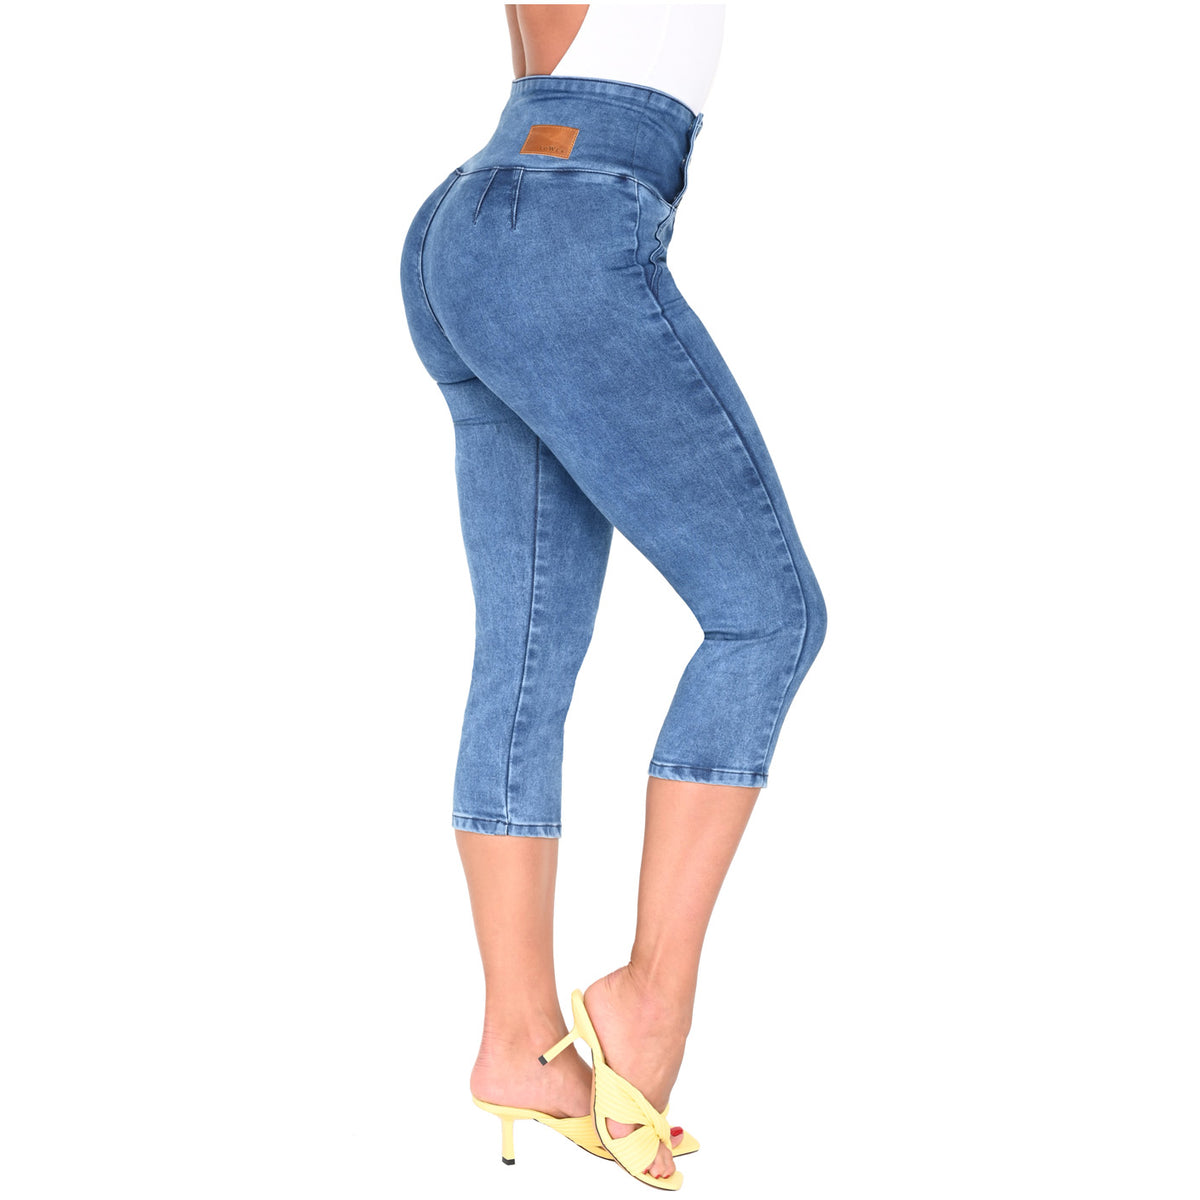 Lowla Shapewear Butt lifting Jean Shorts with Tummy Control